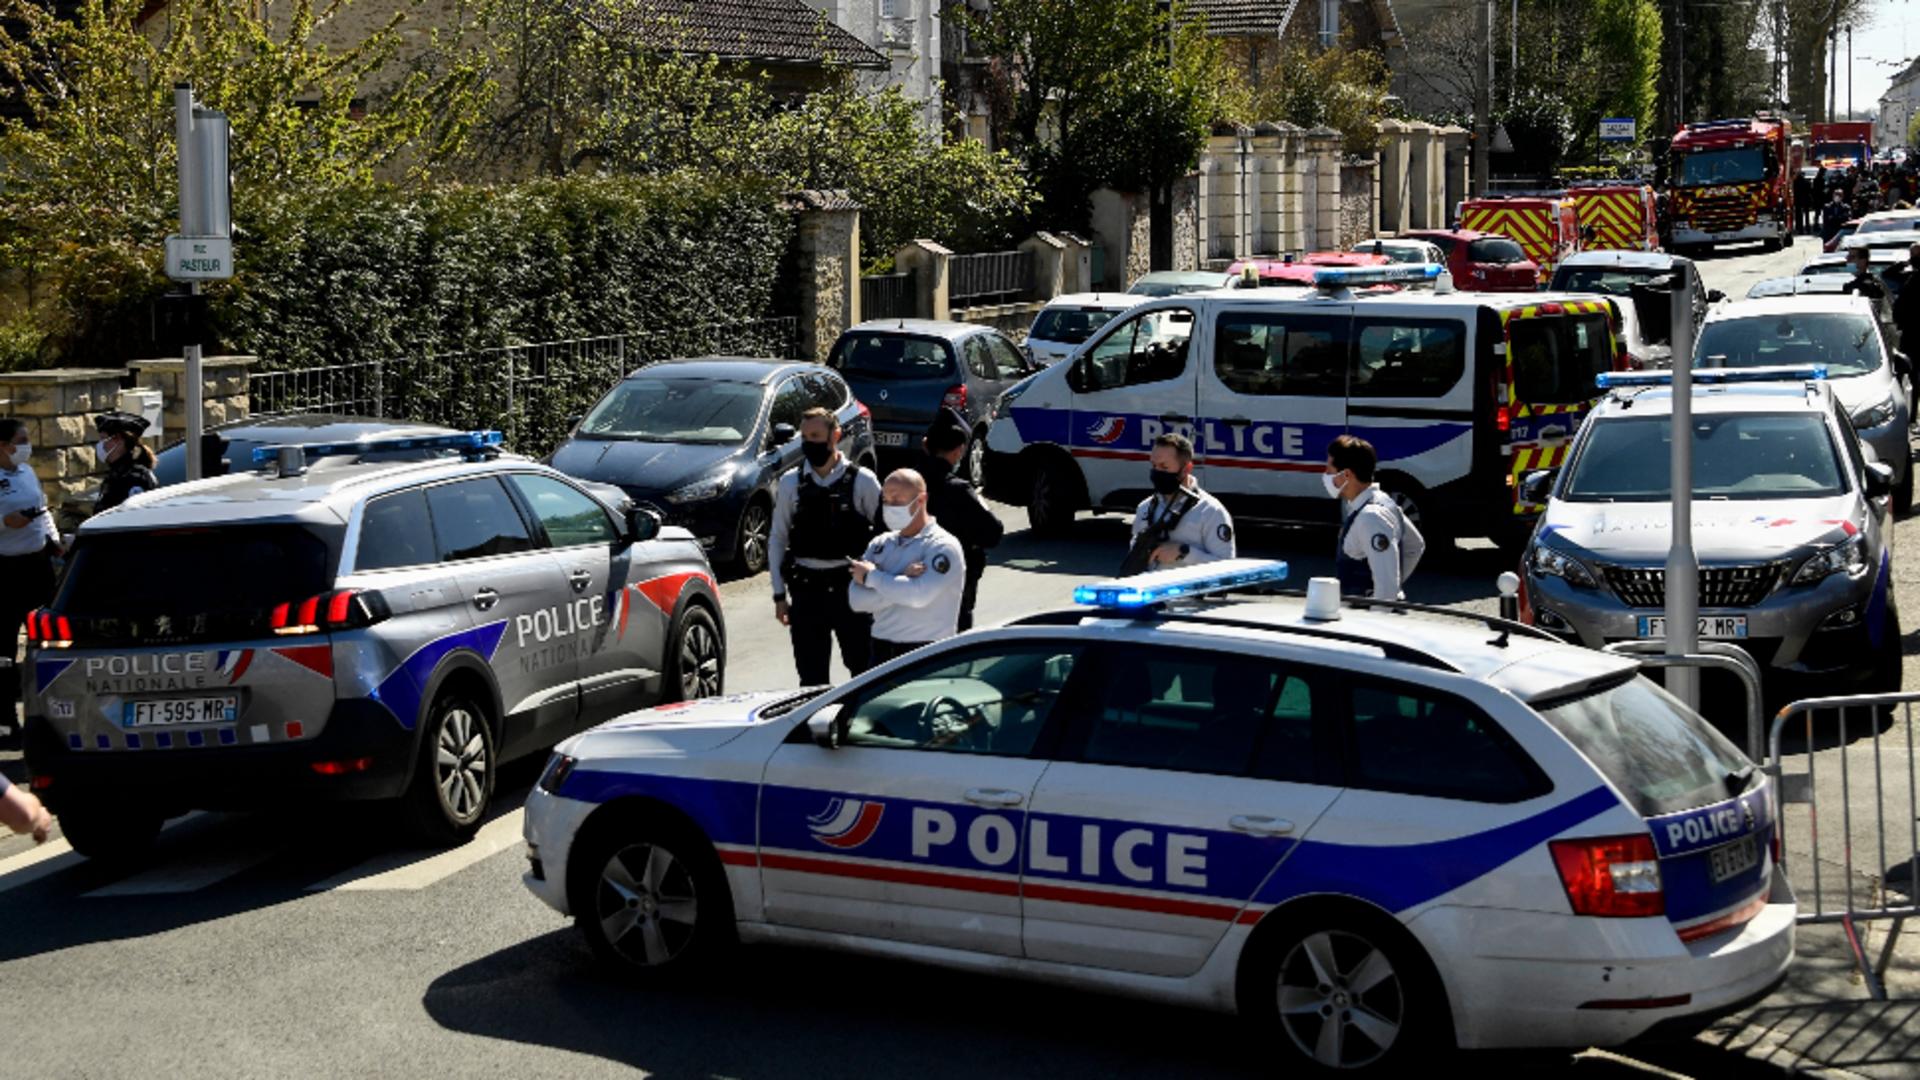 Poliție Franța - imagine de arhivă